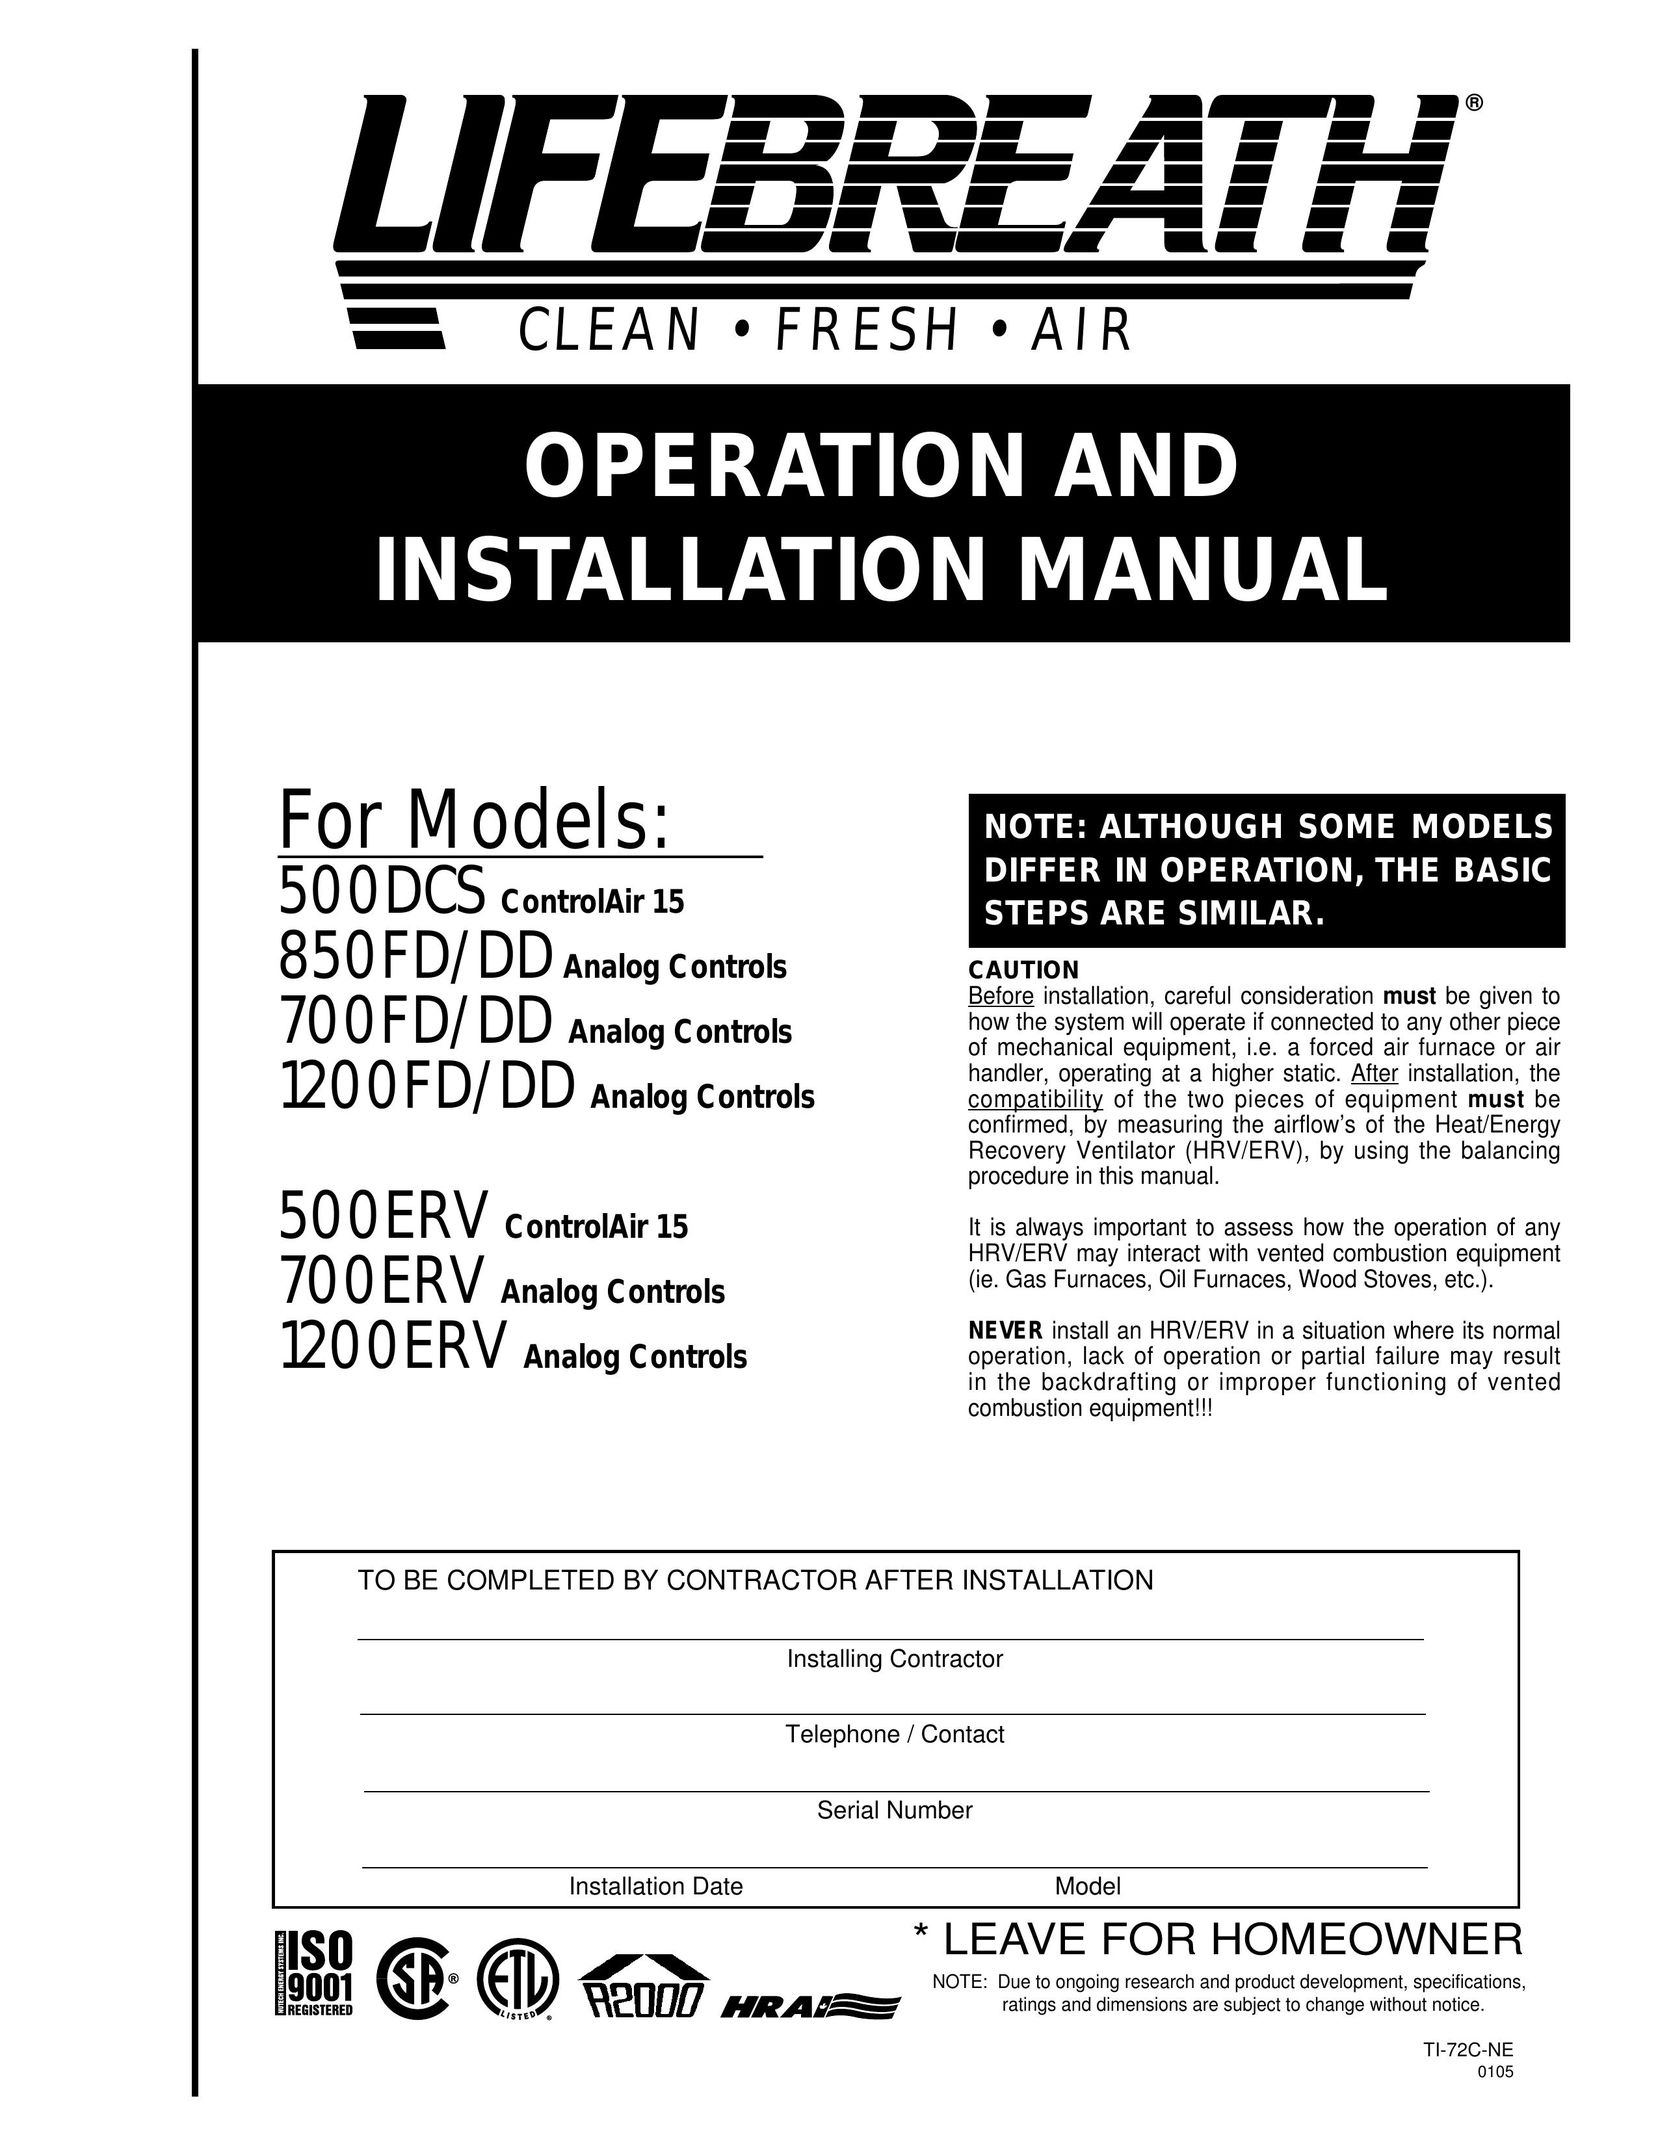 Lifebreath 700FD/DD Air Cleaner User Manual